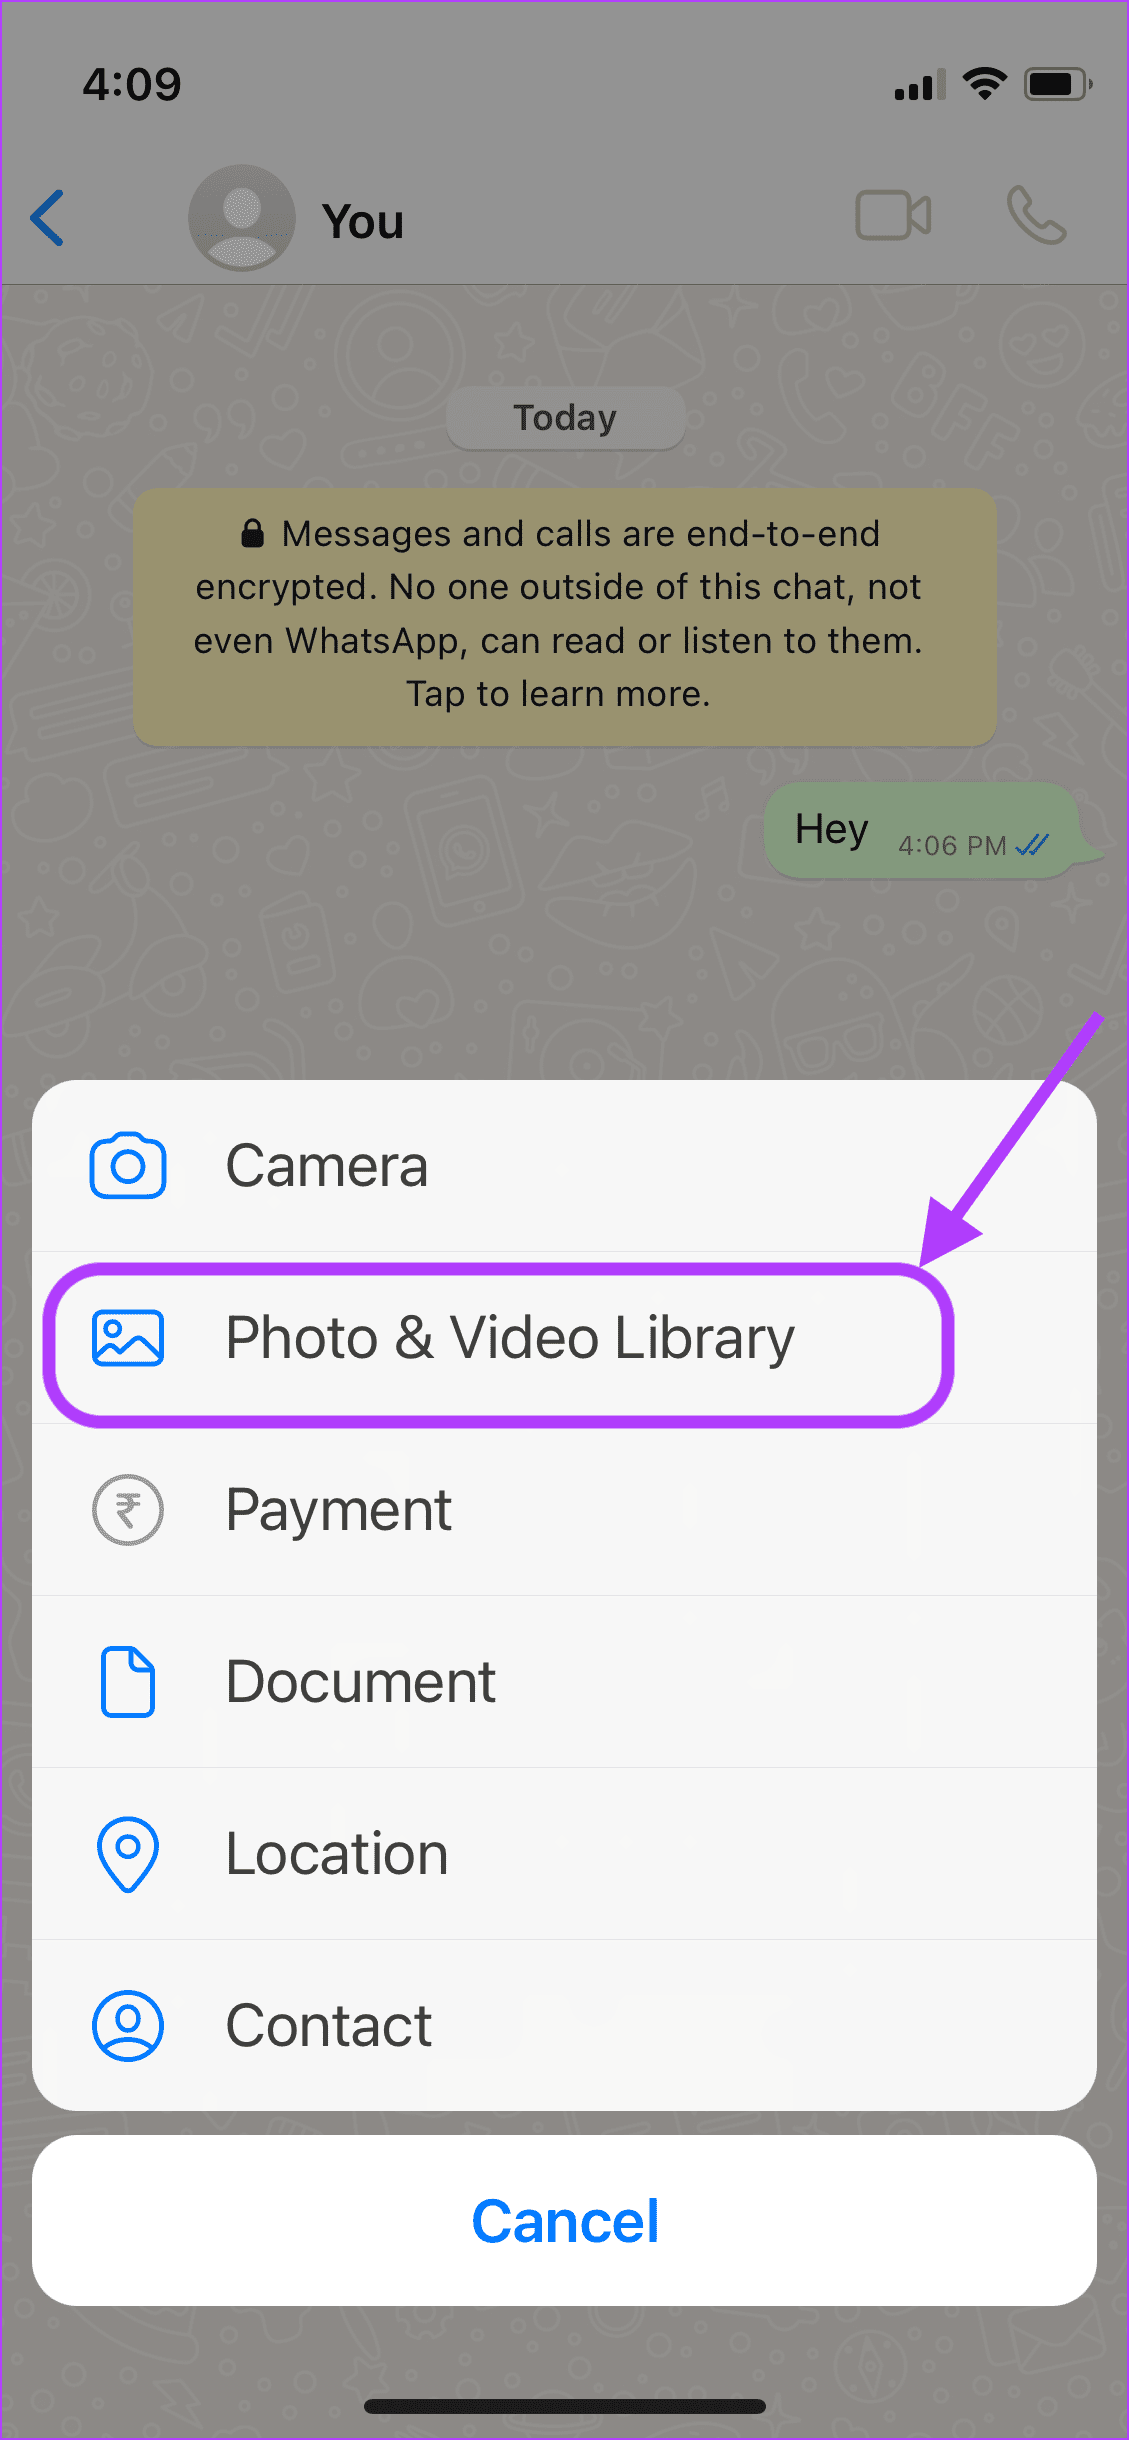 Send Live Photos as GIFs from Inside WhatsApp 4